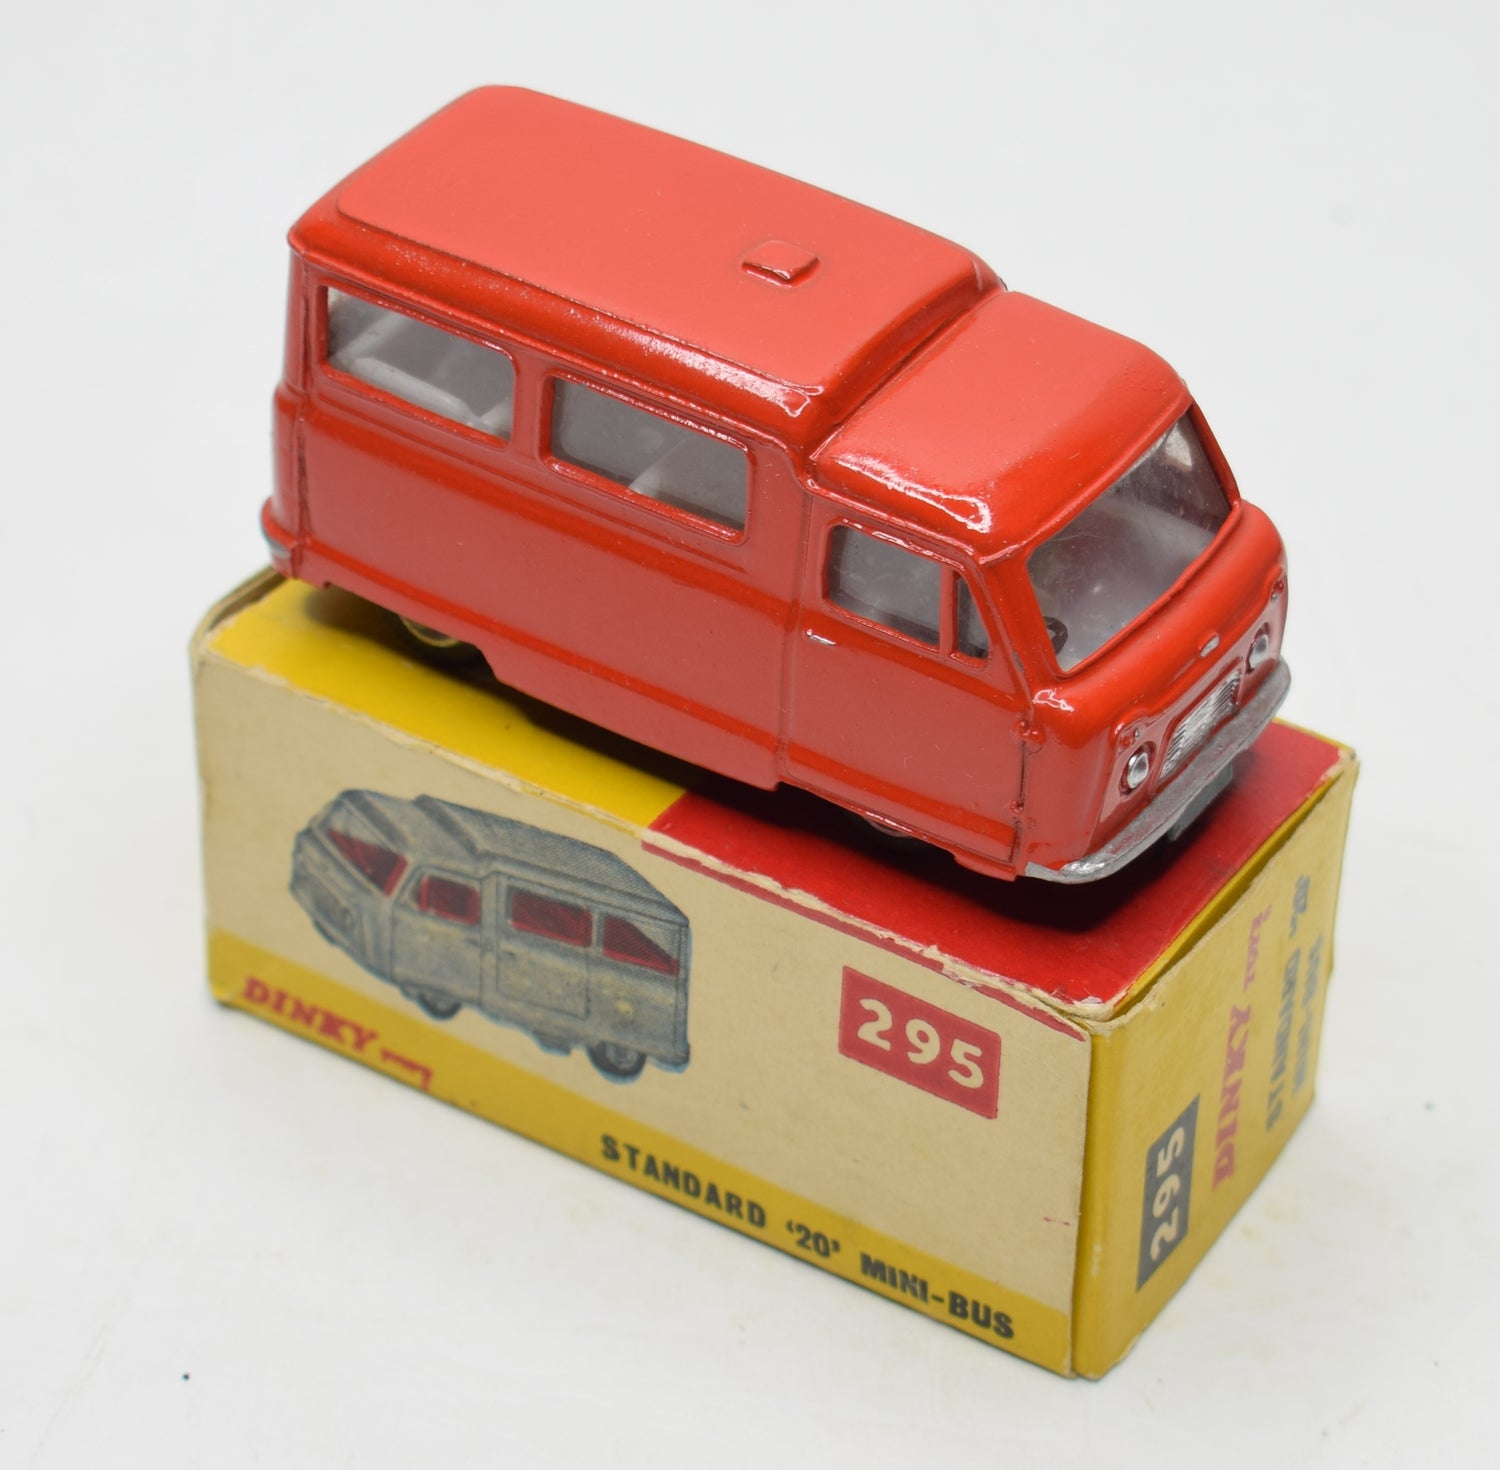 Nicky Toys 295 Standard '20' Mini-bus Very Near Mint/Boxed